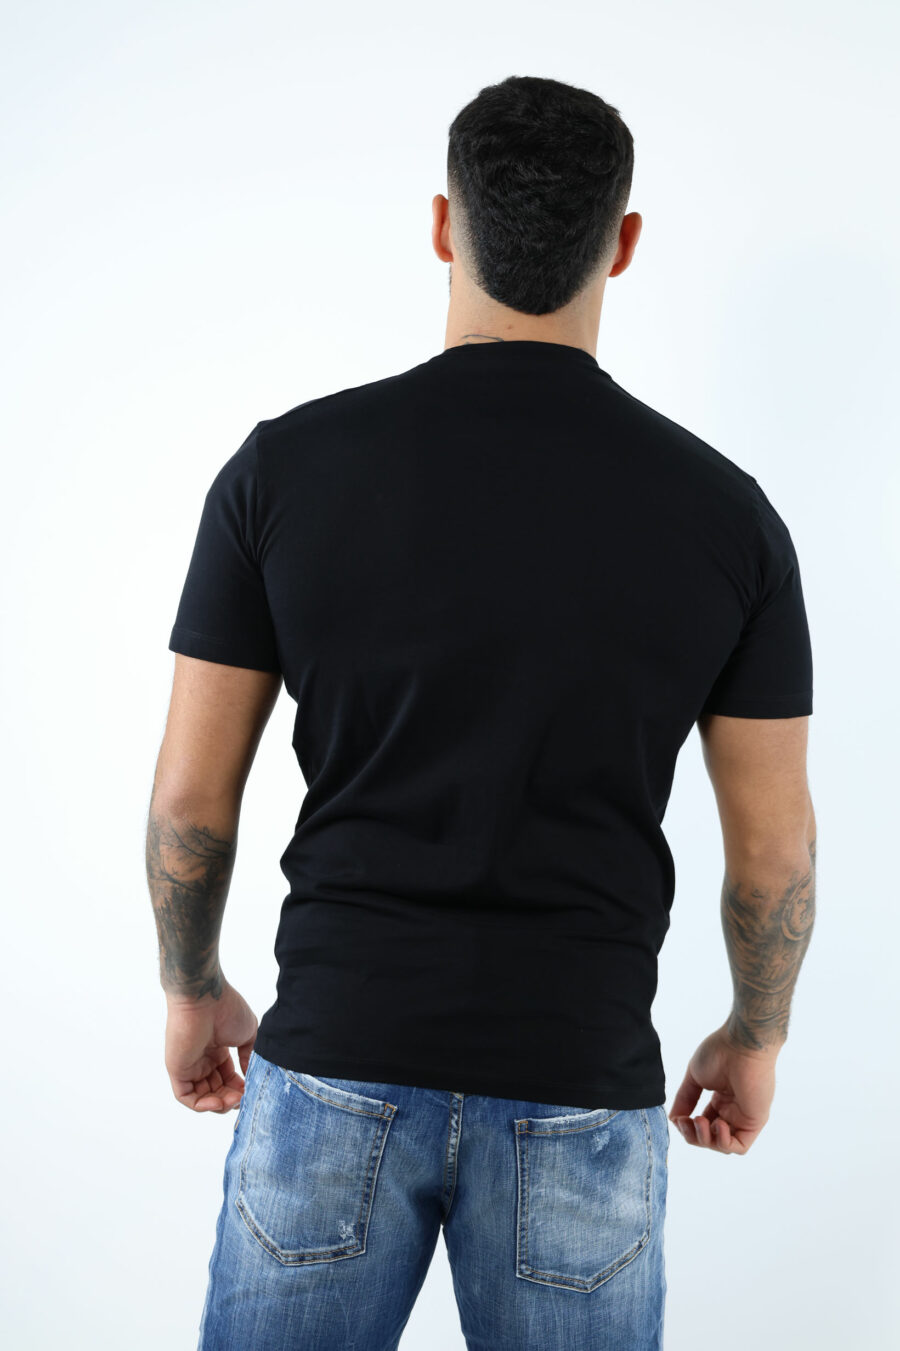 Schwarzes T-Shirt mit weißem "suburbans" Maxilogo - 106890